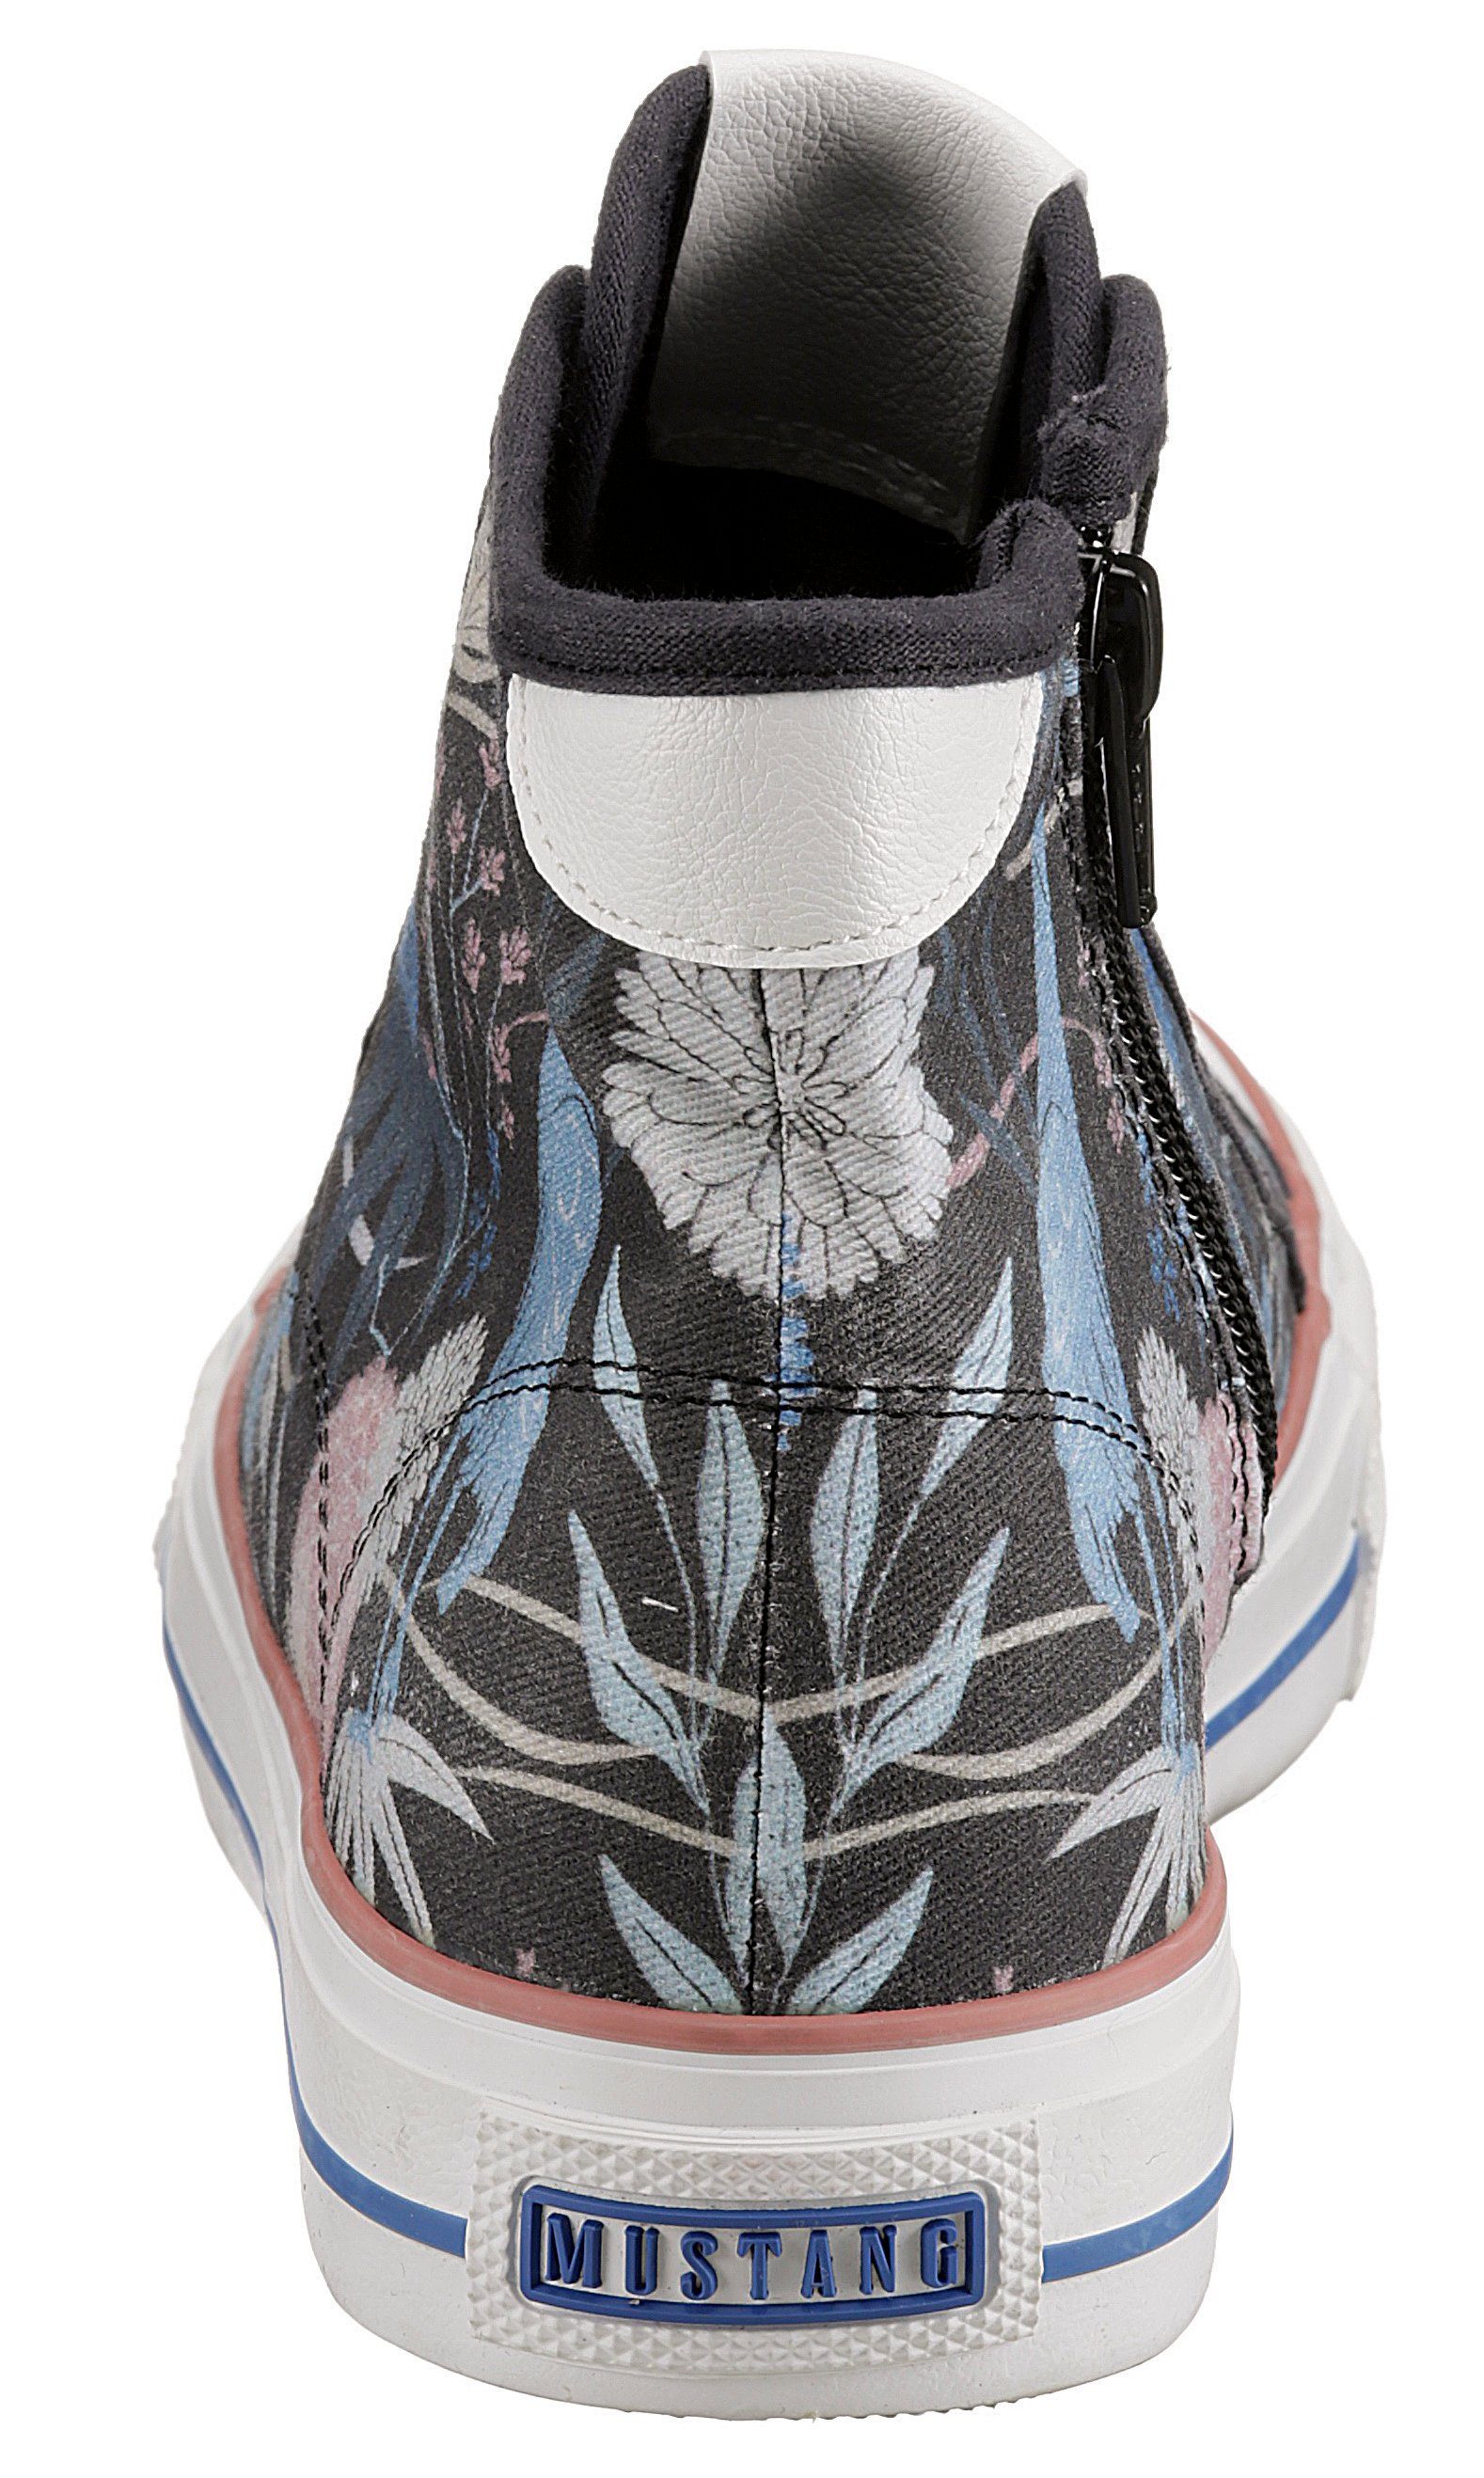 Mustang Shoes Sneaker mit floralem Muster schwarz-bunt